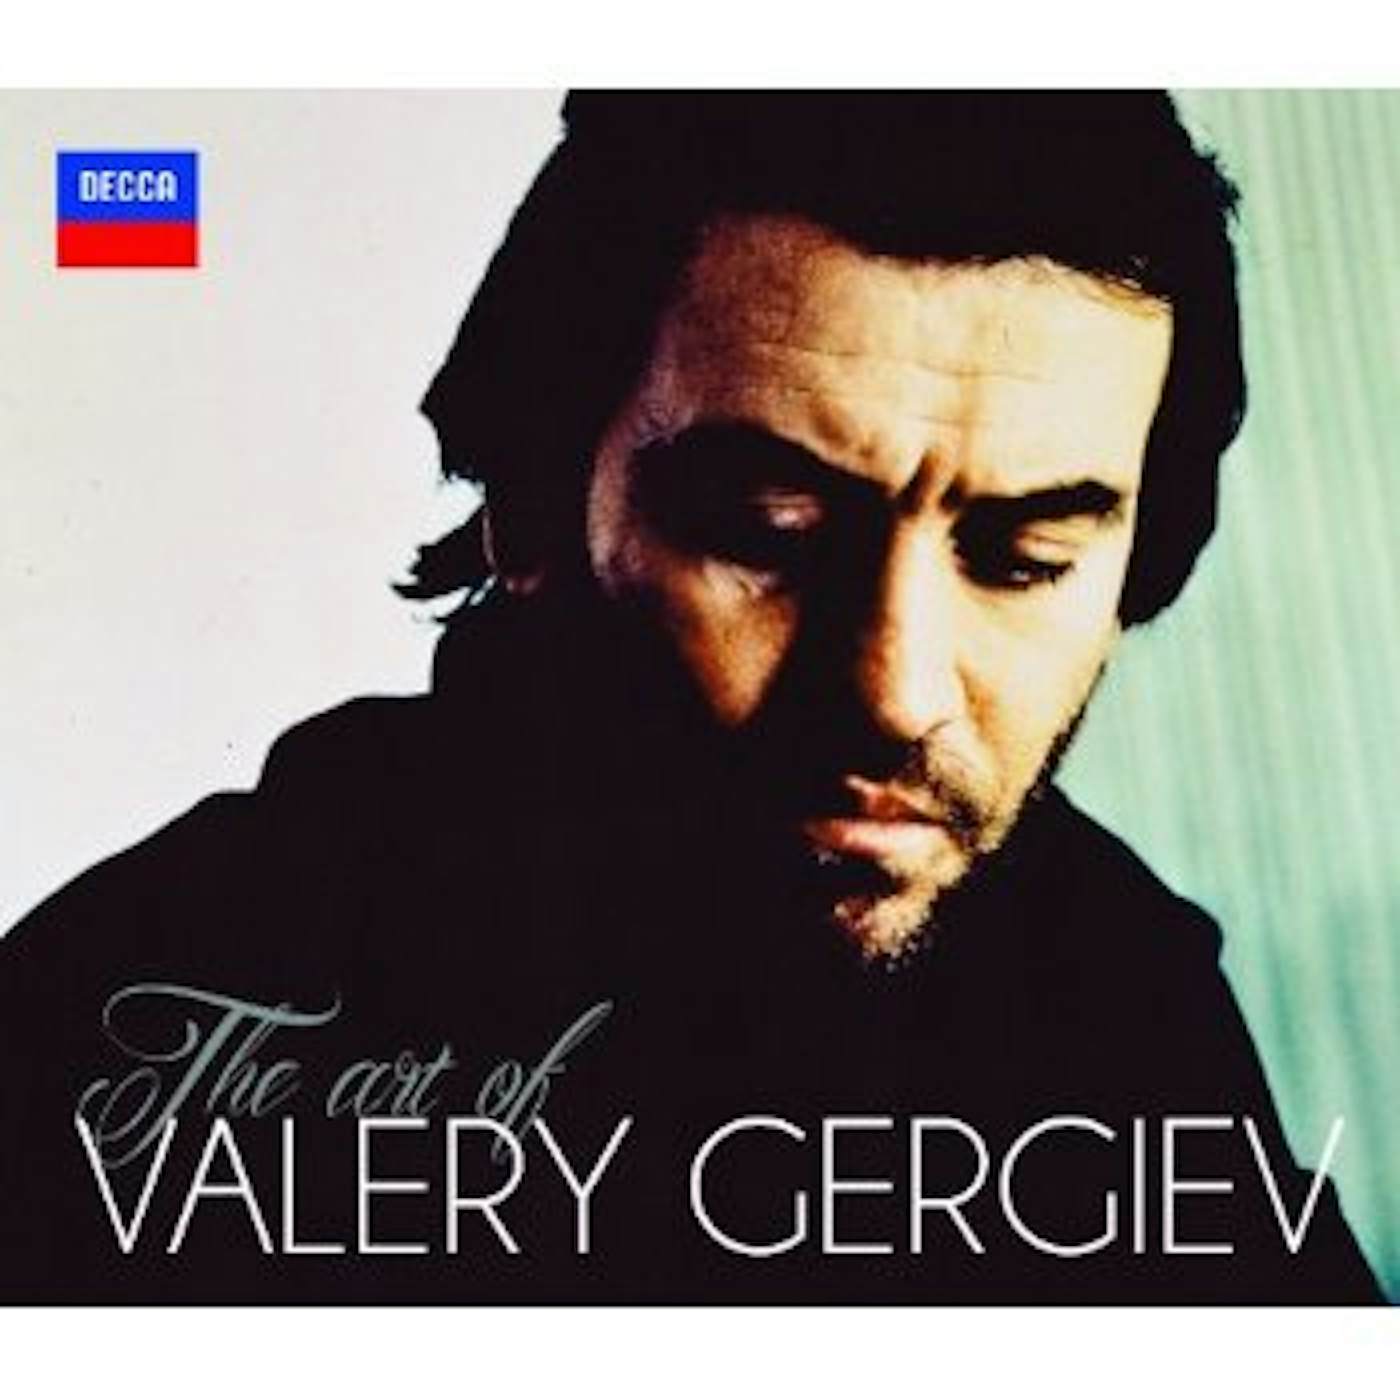 ART OF VALERY GERGIEV CD